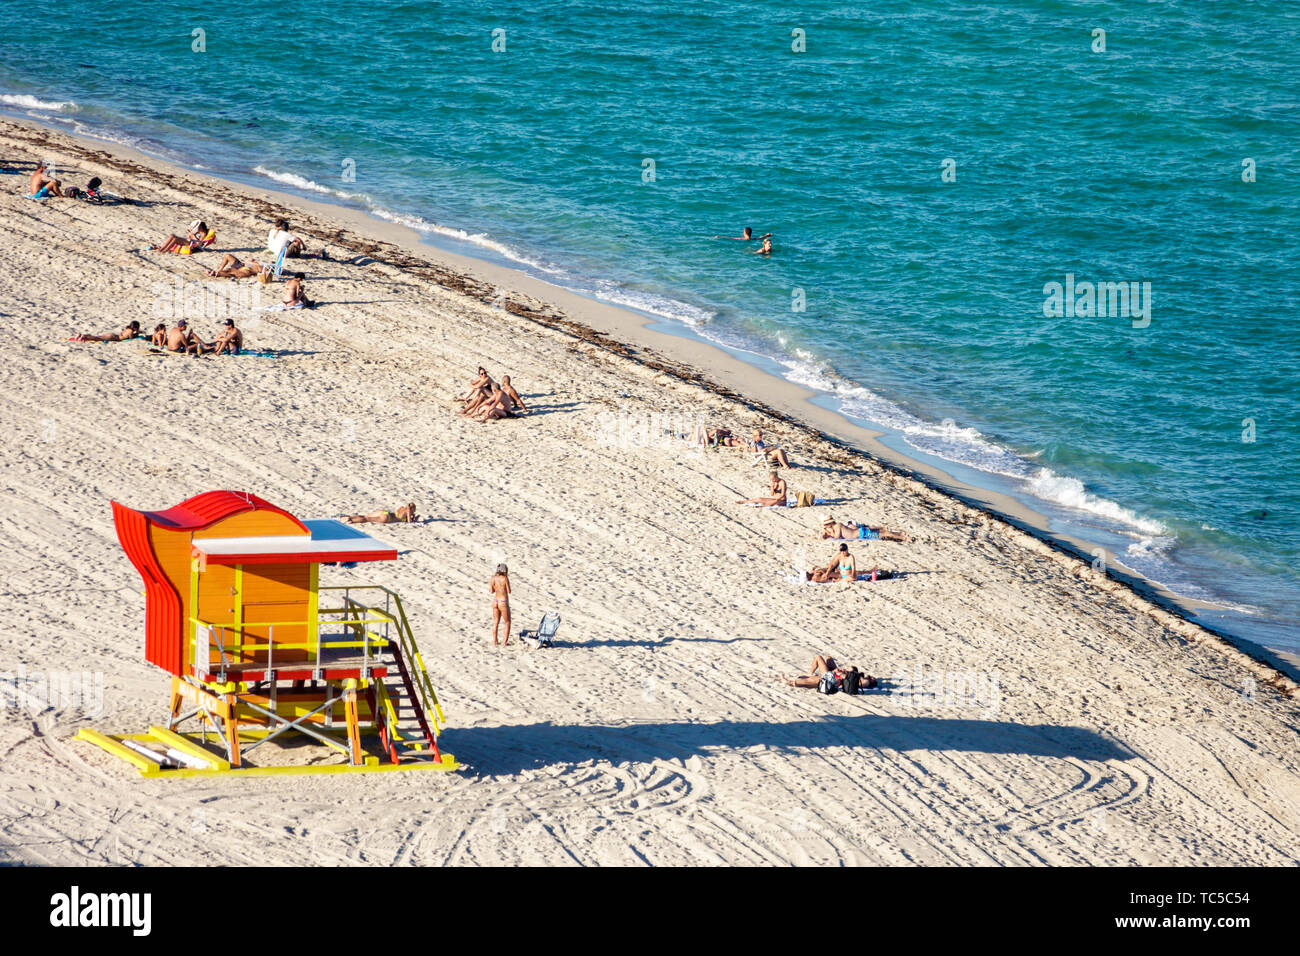 Miami Beach Florida,North Beach,North Shore Open Space Park,public beach sand,lifeguard station tower,Atlantic Ocean,sunbathers,FL190228100 Stock Photo